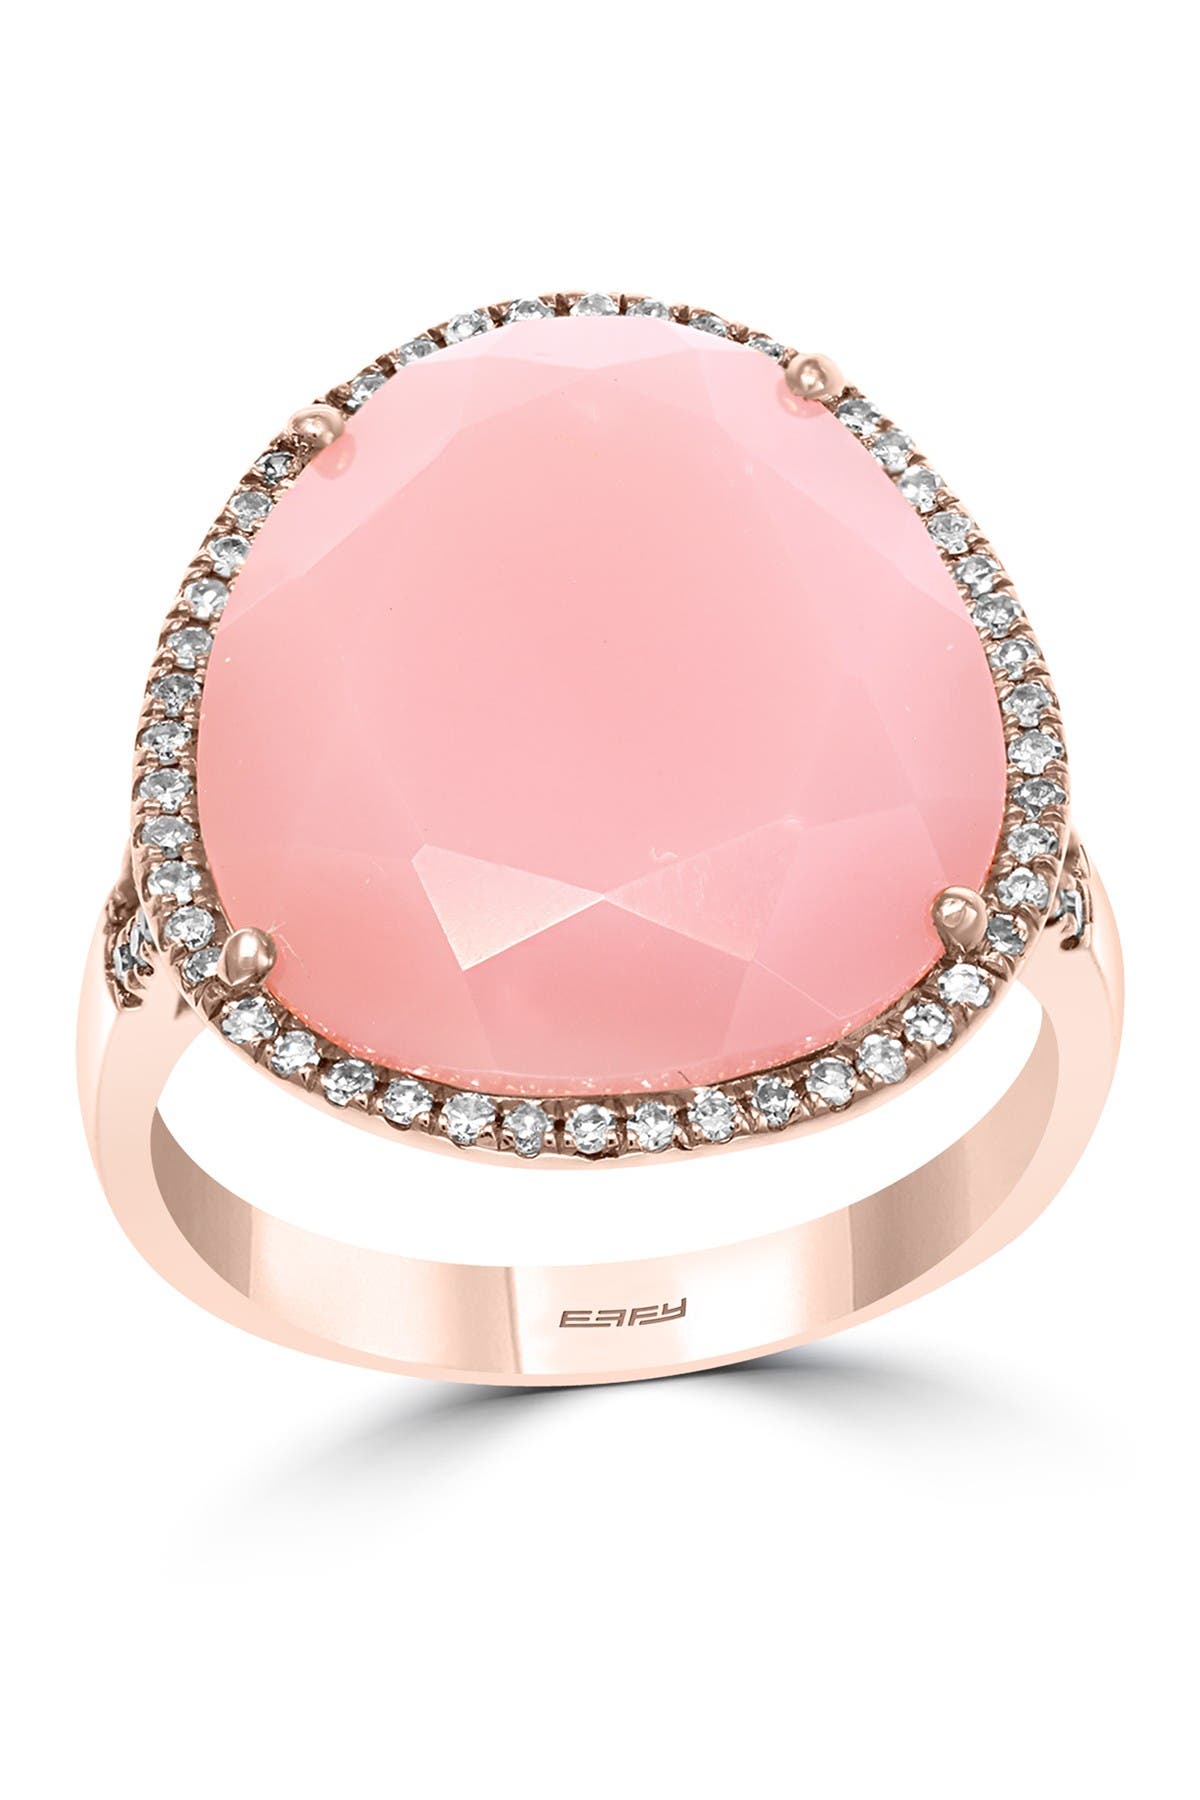 Effy | 14K Rose Gold Diamond & Pink Opal Ring - Size 7 | Nordstrom Rack